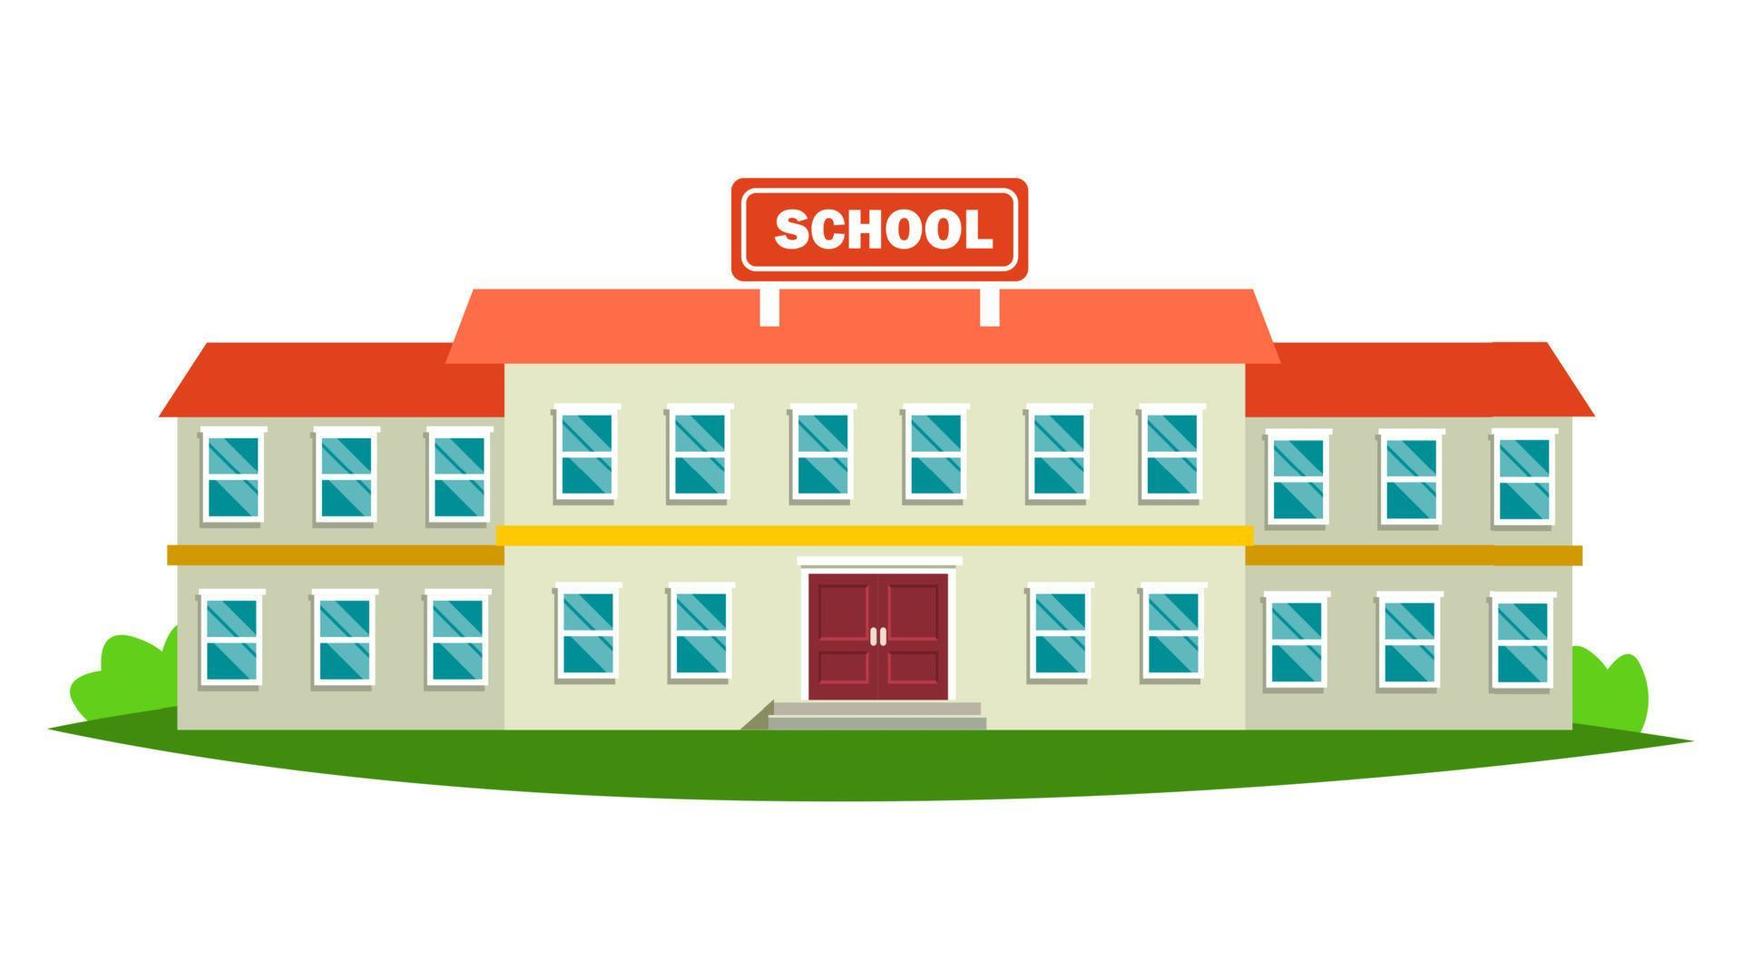 School Building Vector. Modern Education City Construction. Urban Sign. Font Yard. Isolated Flat Cartoon Illustration vector